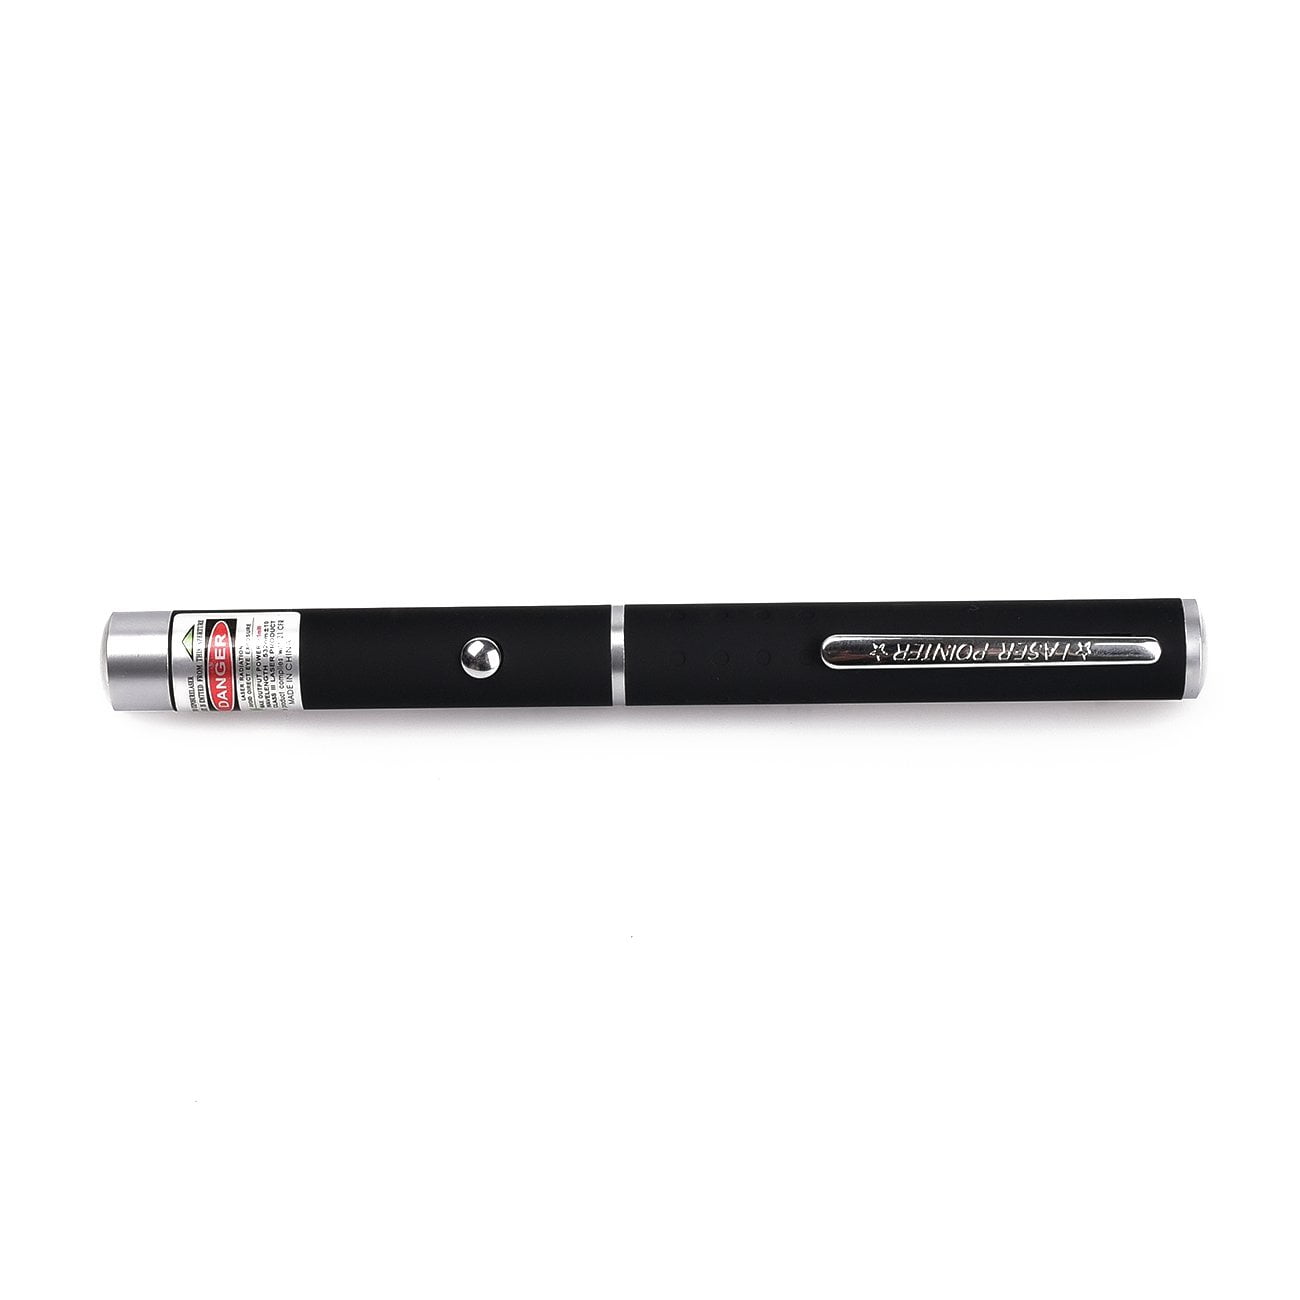 Professional Red Laser Pointer 1mw 532nm Lazer Pen Light Visible Beam Focus UK 